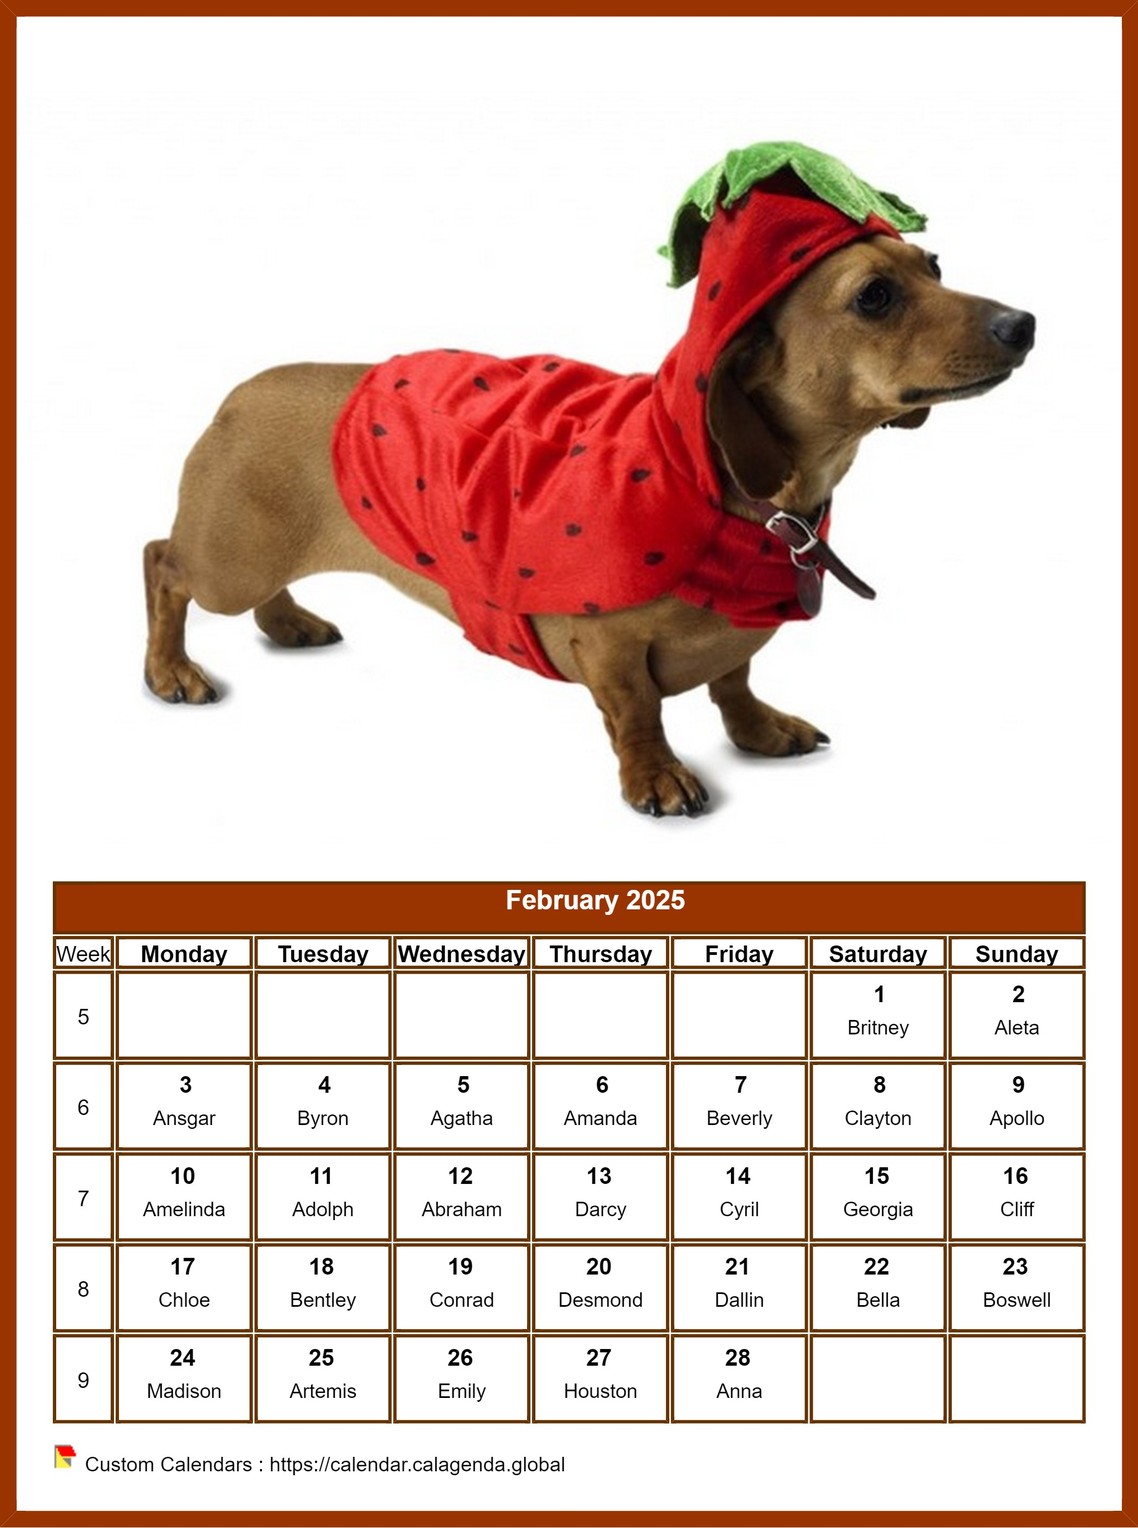 Calendar February 2025 dogs